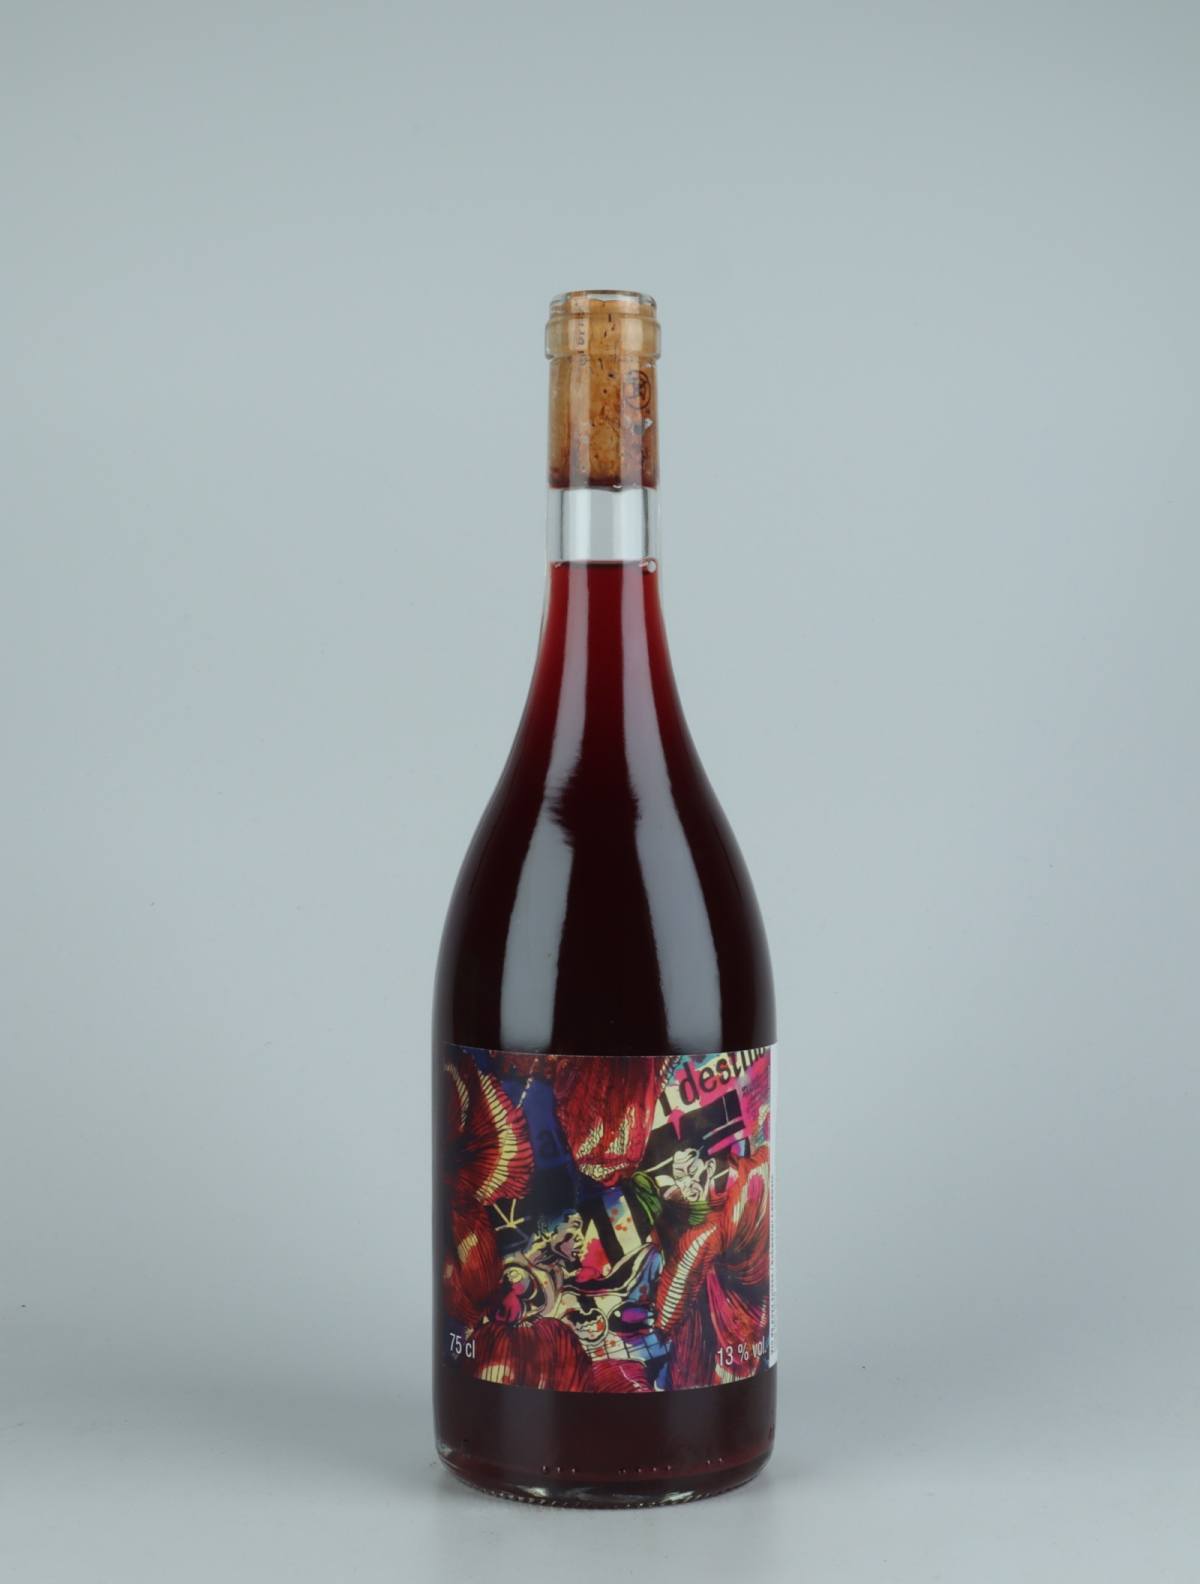 A bottle 2019 Pinot Noir Red wine from , Neuchâtel in Switzerland